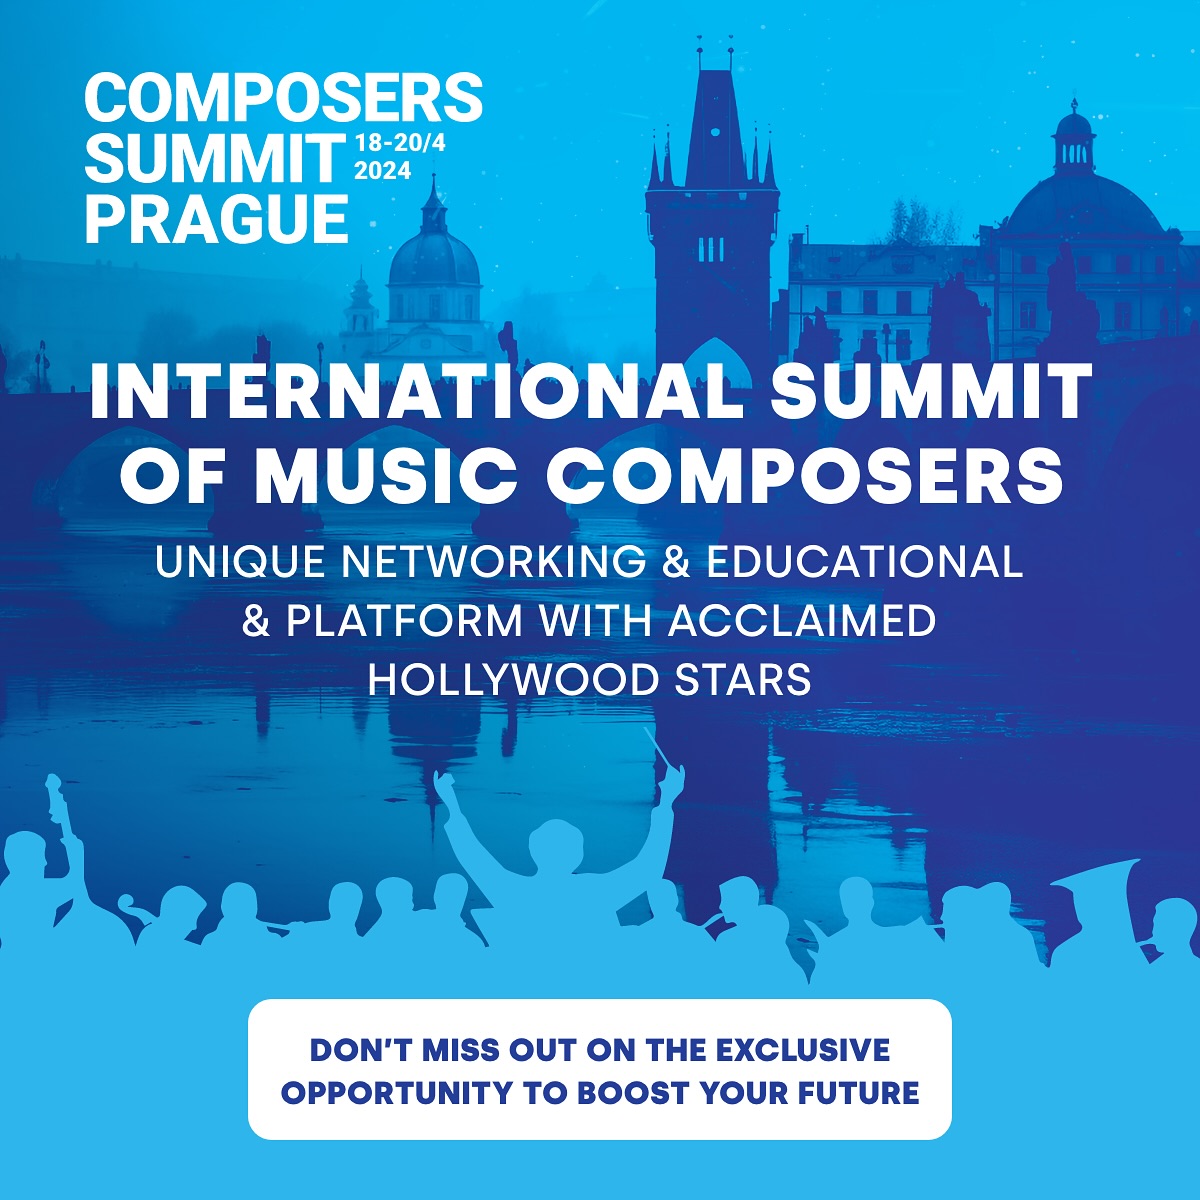 Vizuál akce Composers Summit Prague 2024